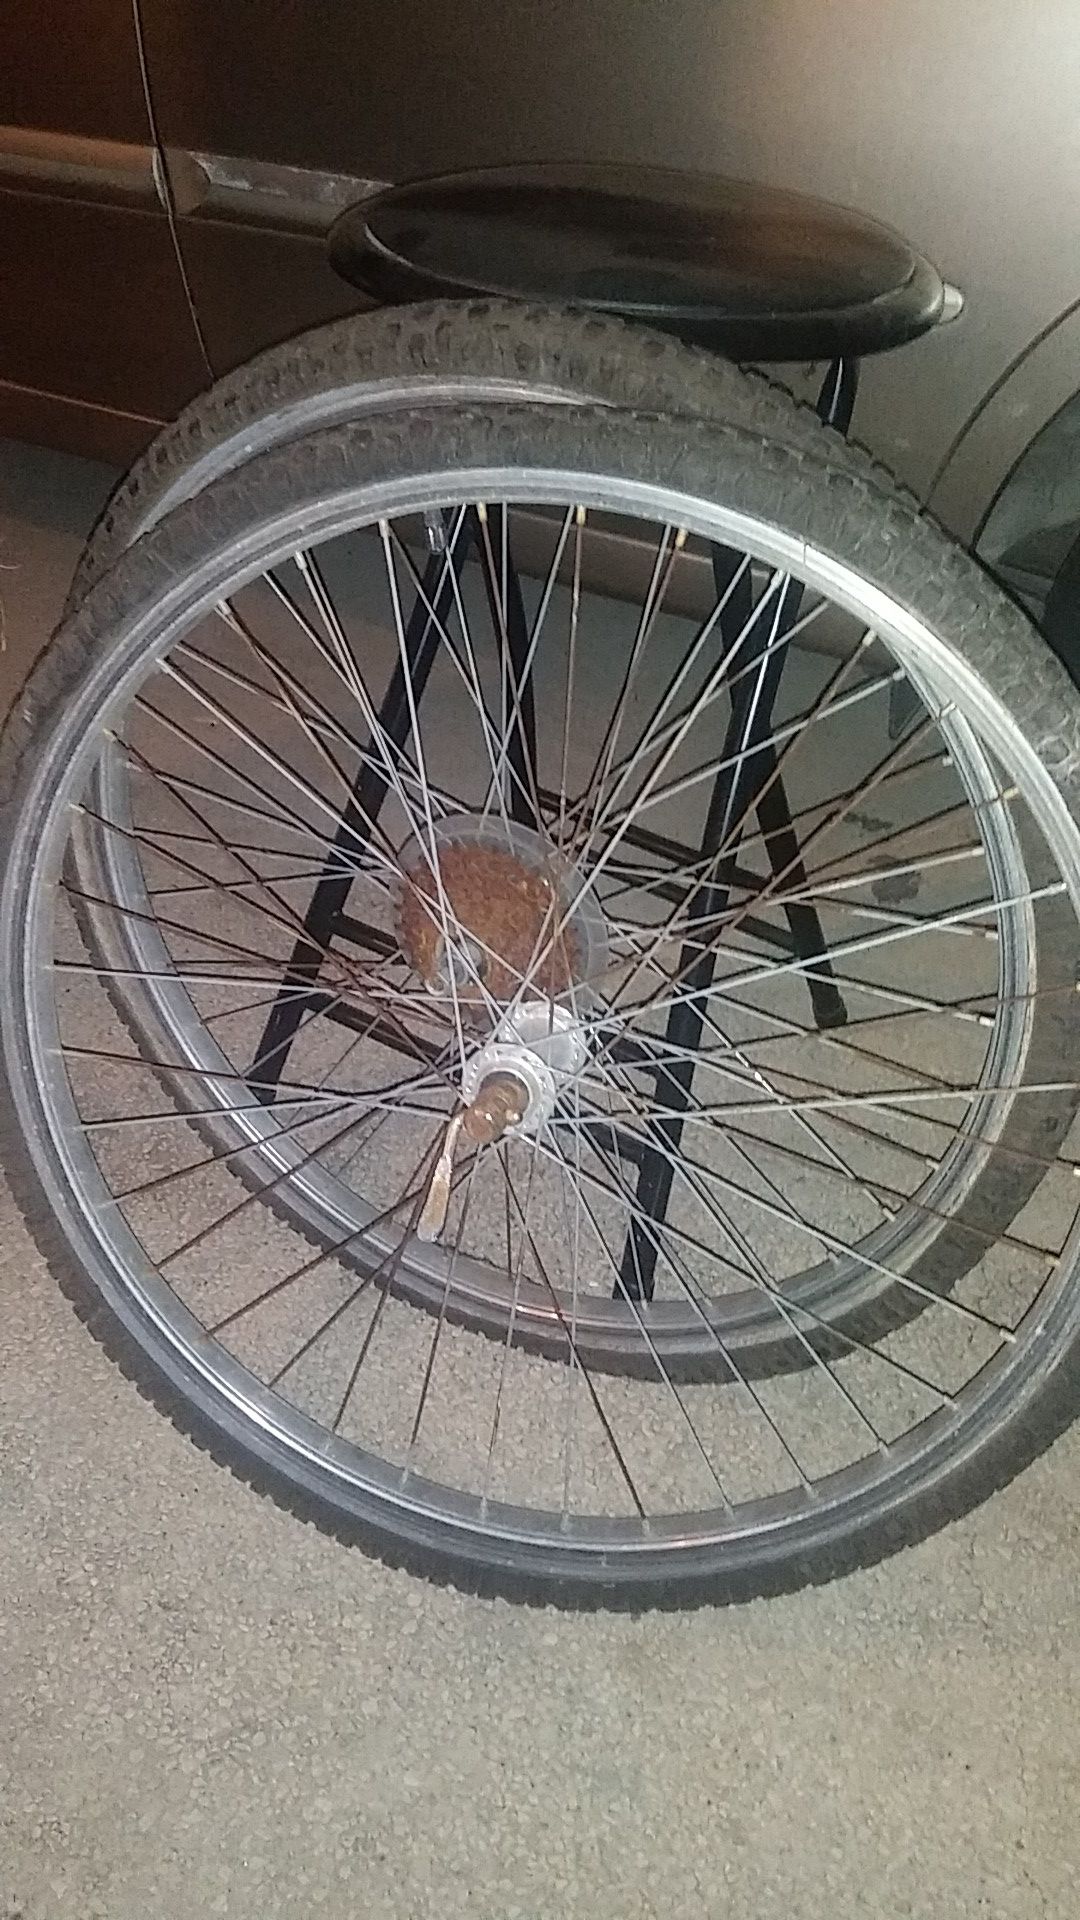 22 inch bike rims . tires are no good